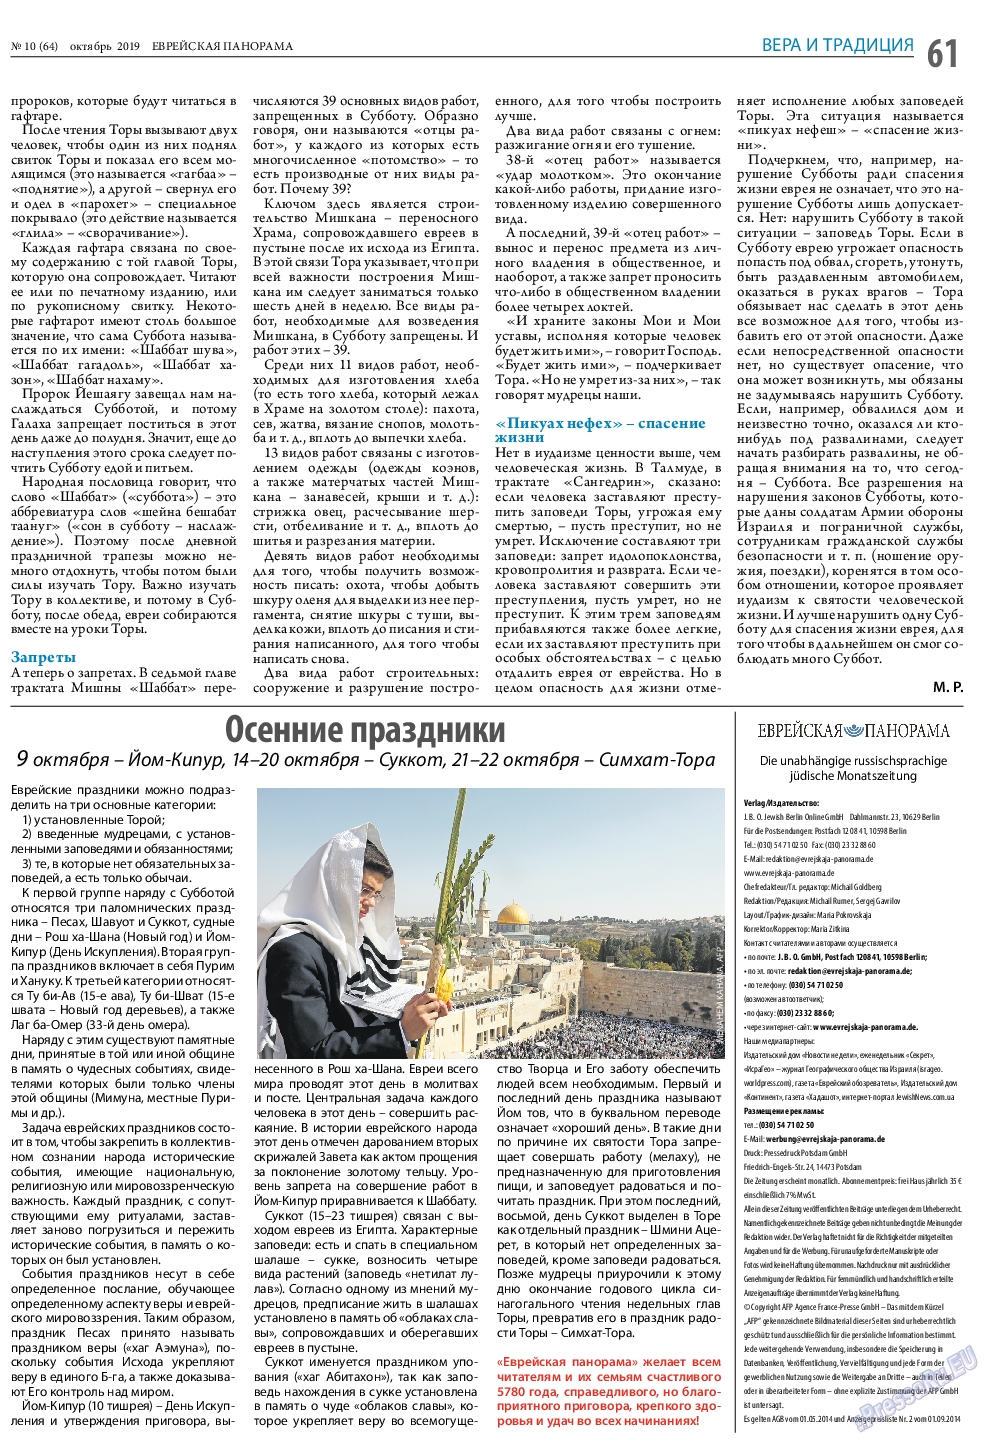 Еврейская панорама, газета. 2019 №10 стр.61